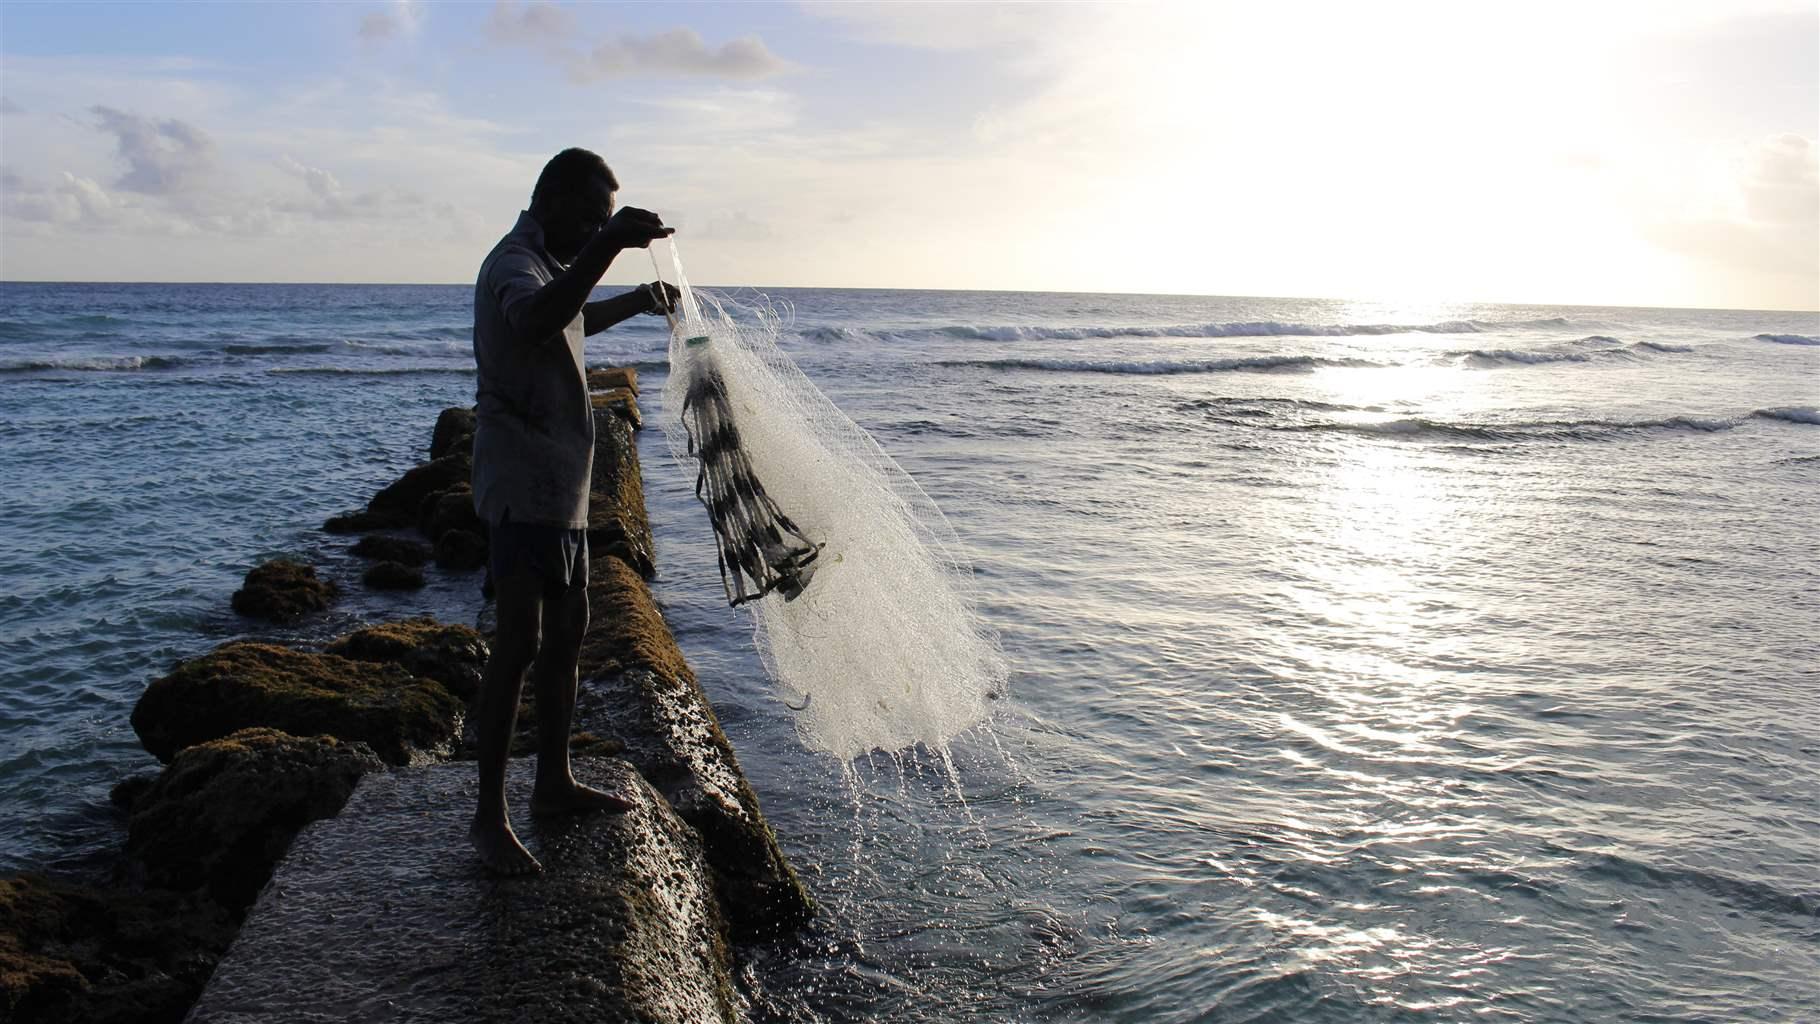 Fisherman casting his net in the sea, Hastings, Barbados, Caribbean